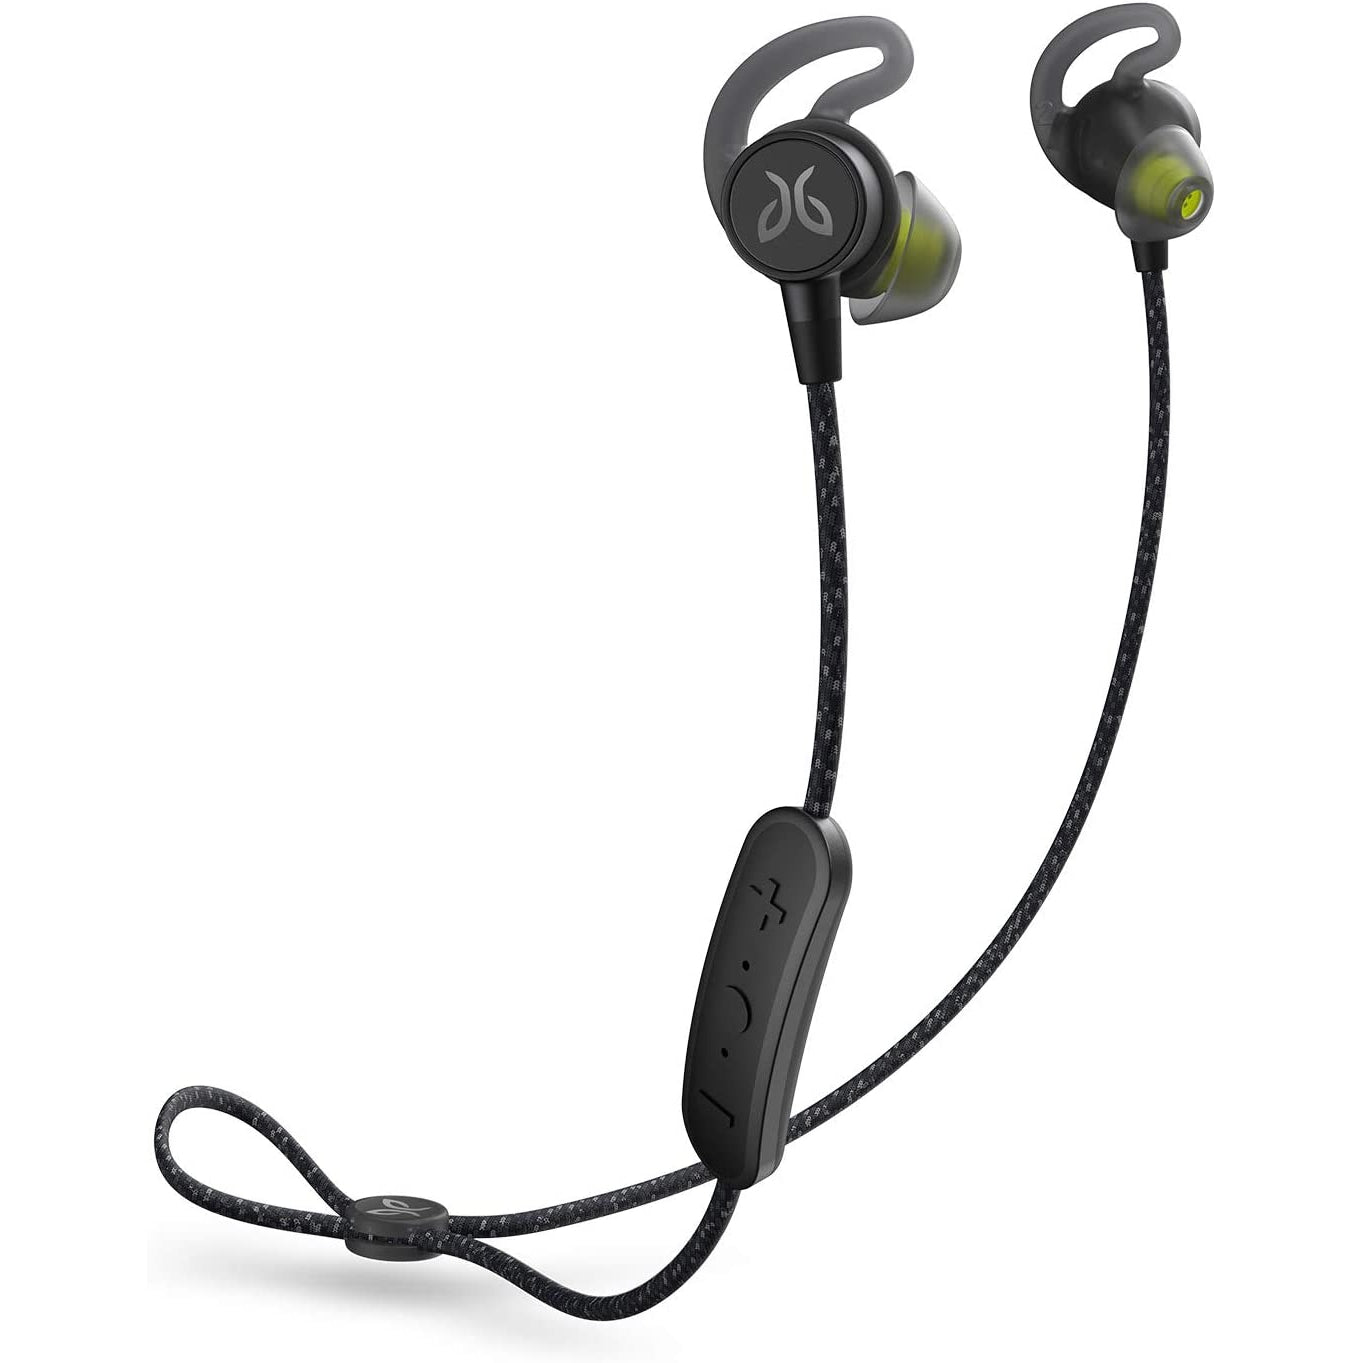 Jaybird Tarah Pro Wireless Bluetooth Headphones - Black - Refurbished Excellent